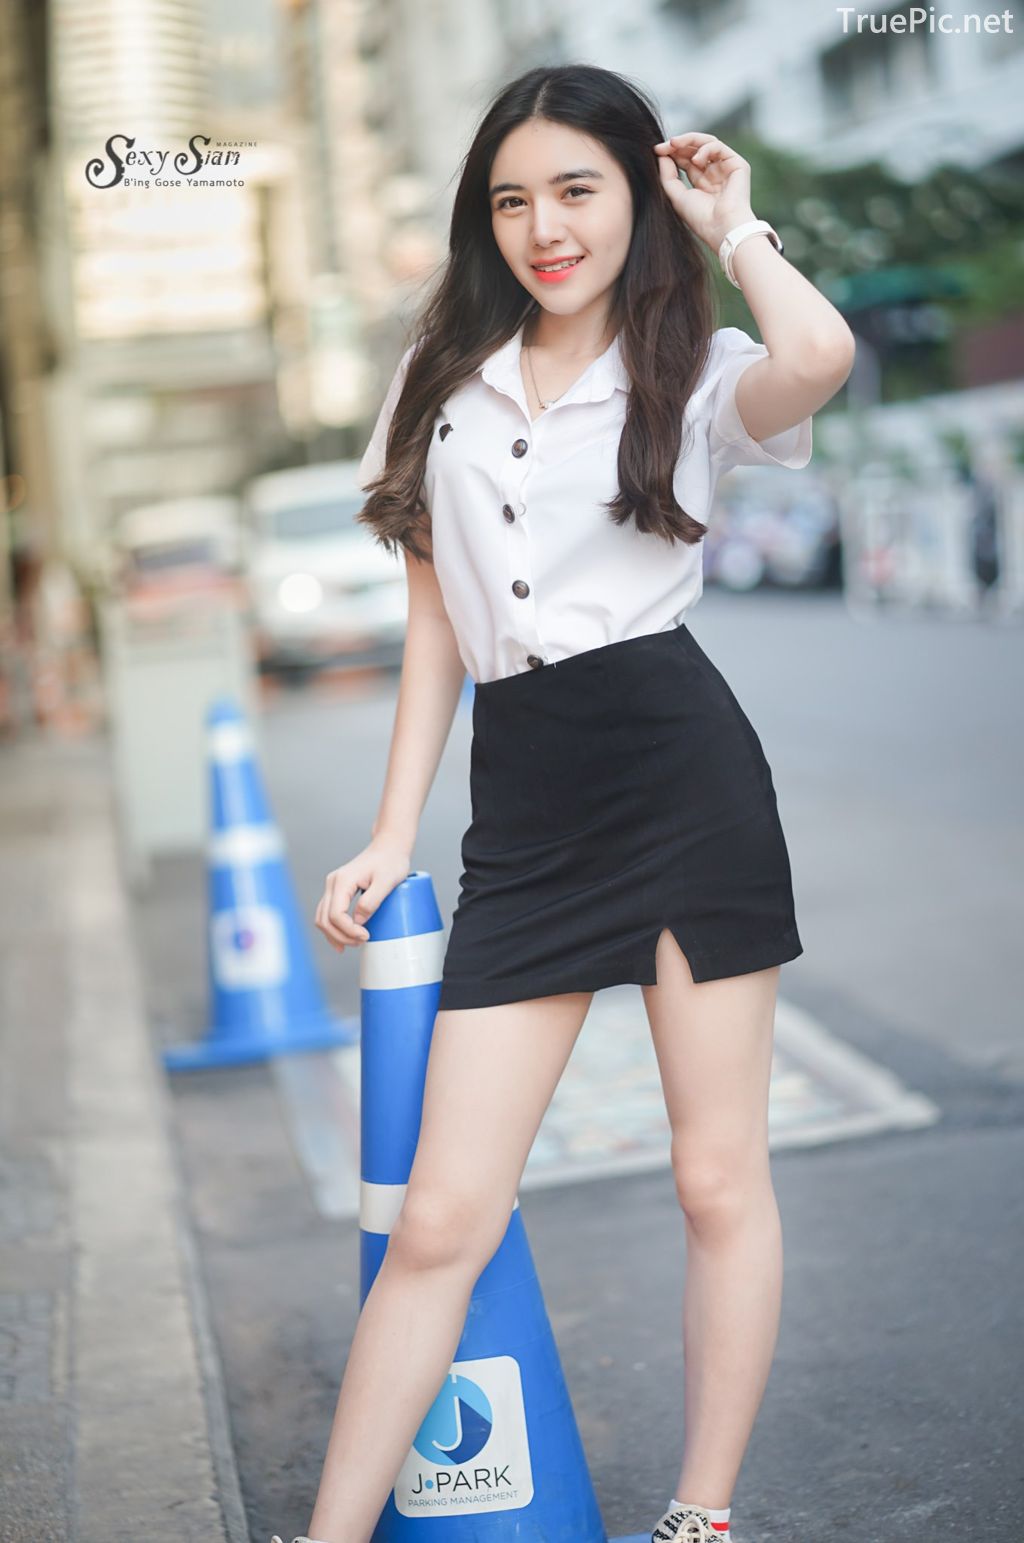 Thailand beautiful girl - Chonticha Chalimewong - Thai Girl Student uniform - TruePic.net - Picture 25